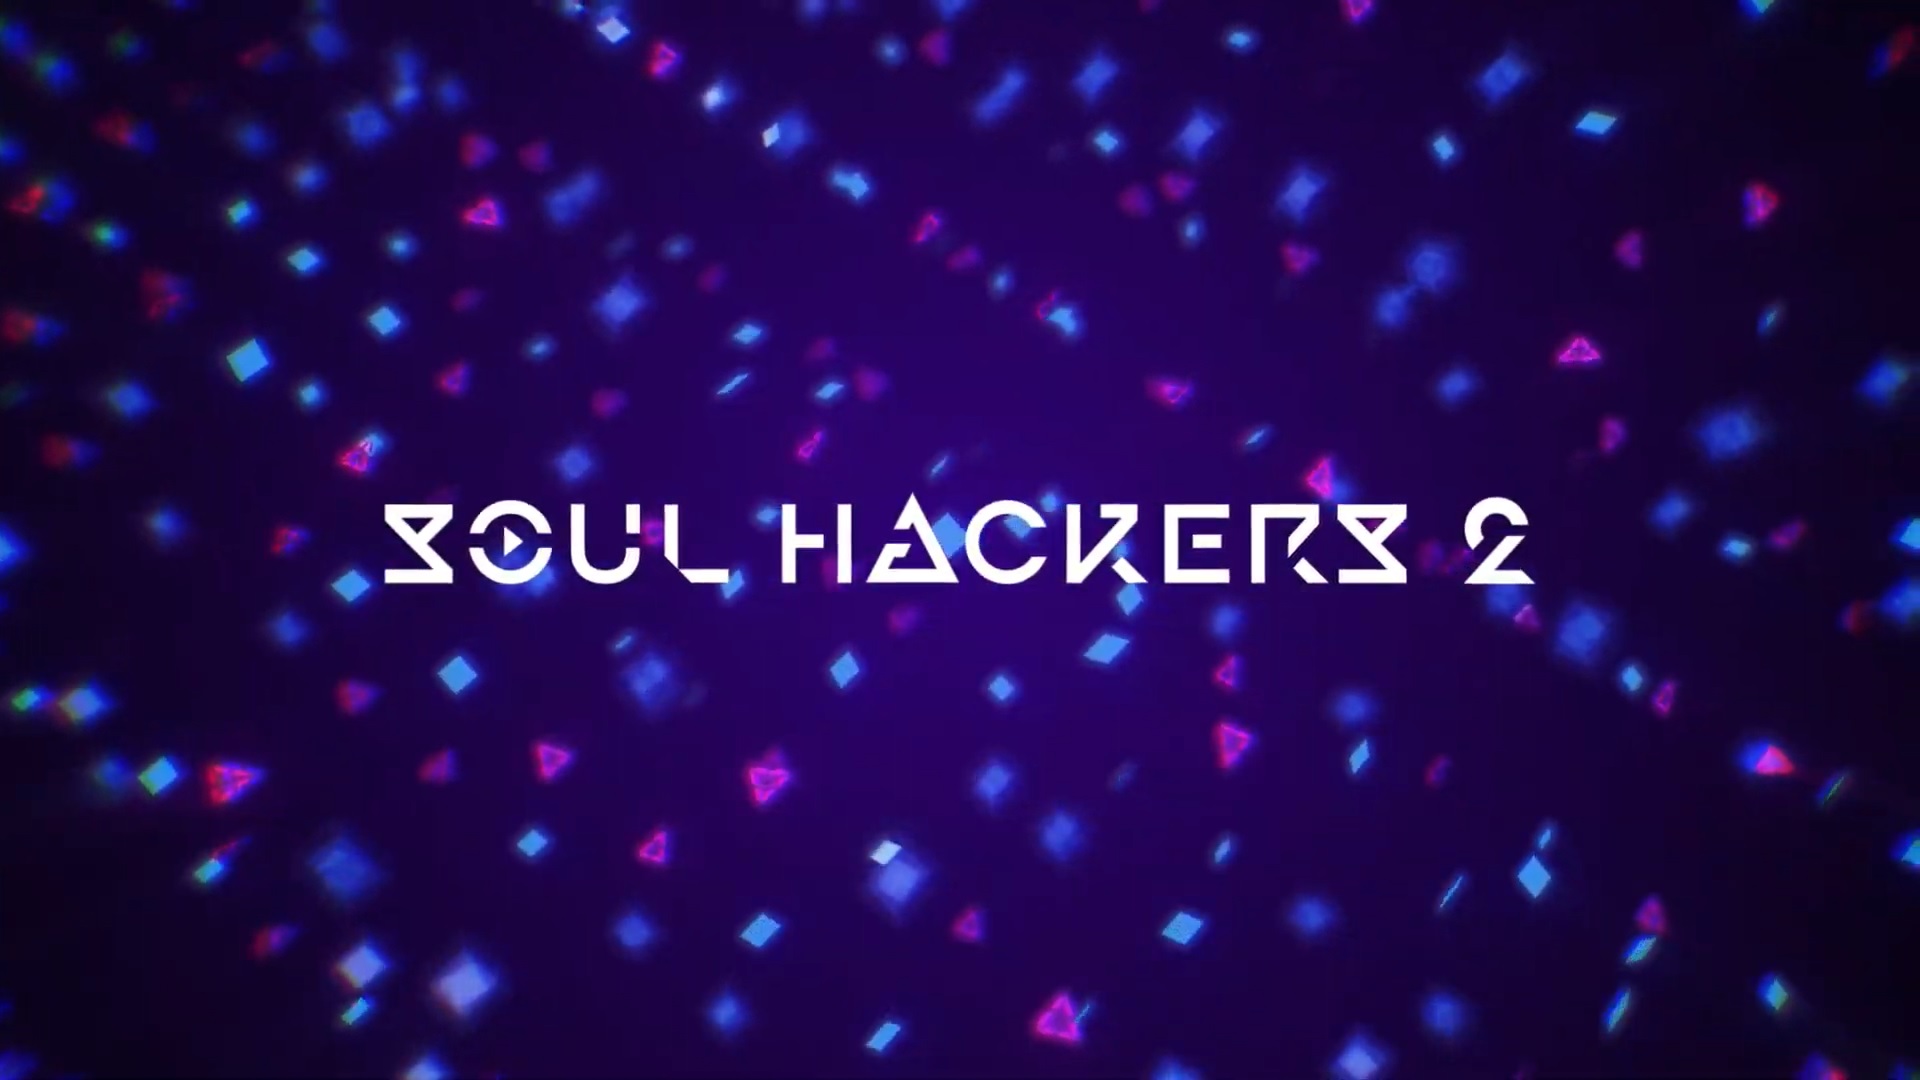 Soul Hackers 2 Fails to Surpass Its Predecessor